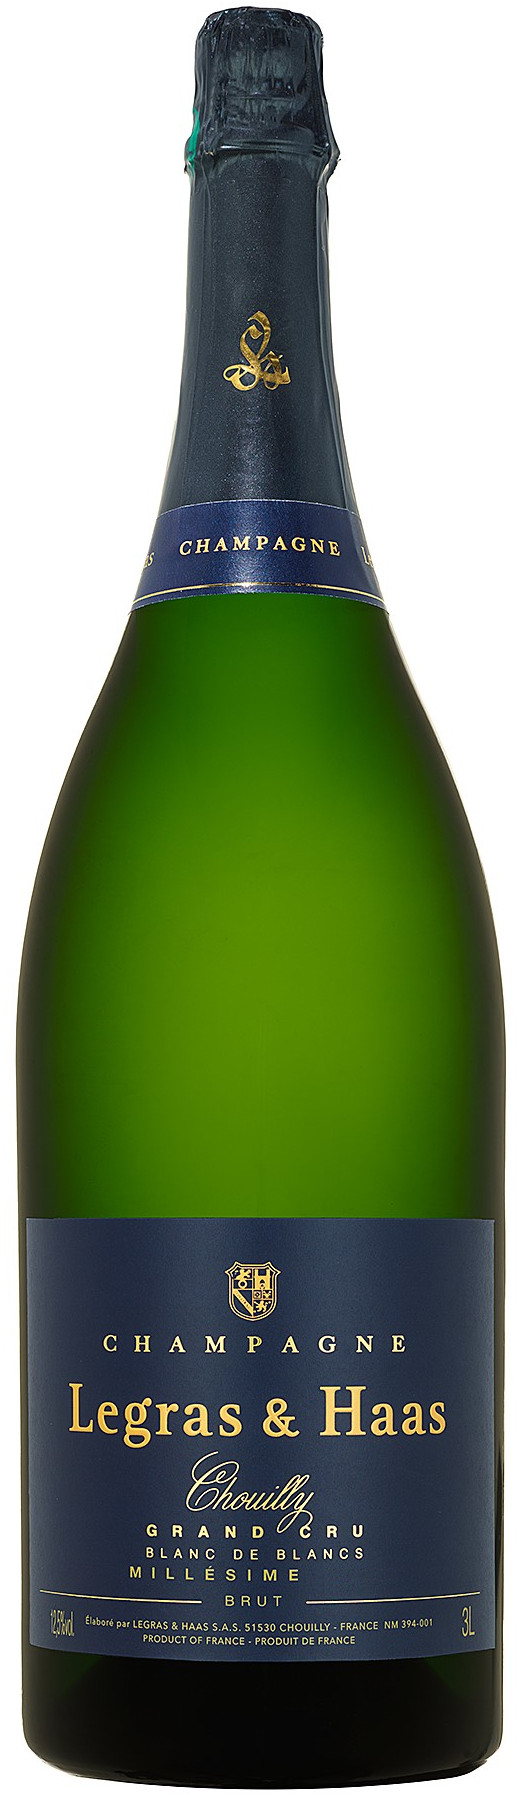 image of Champagne Legras & Haas Blanc de Blancs Grand Cru, Jeroboam 2014